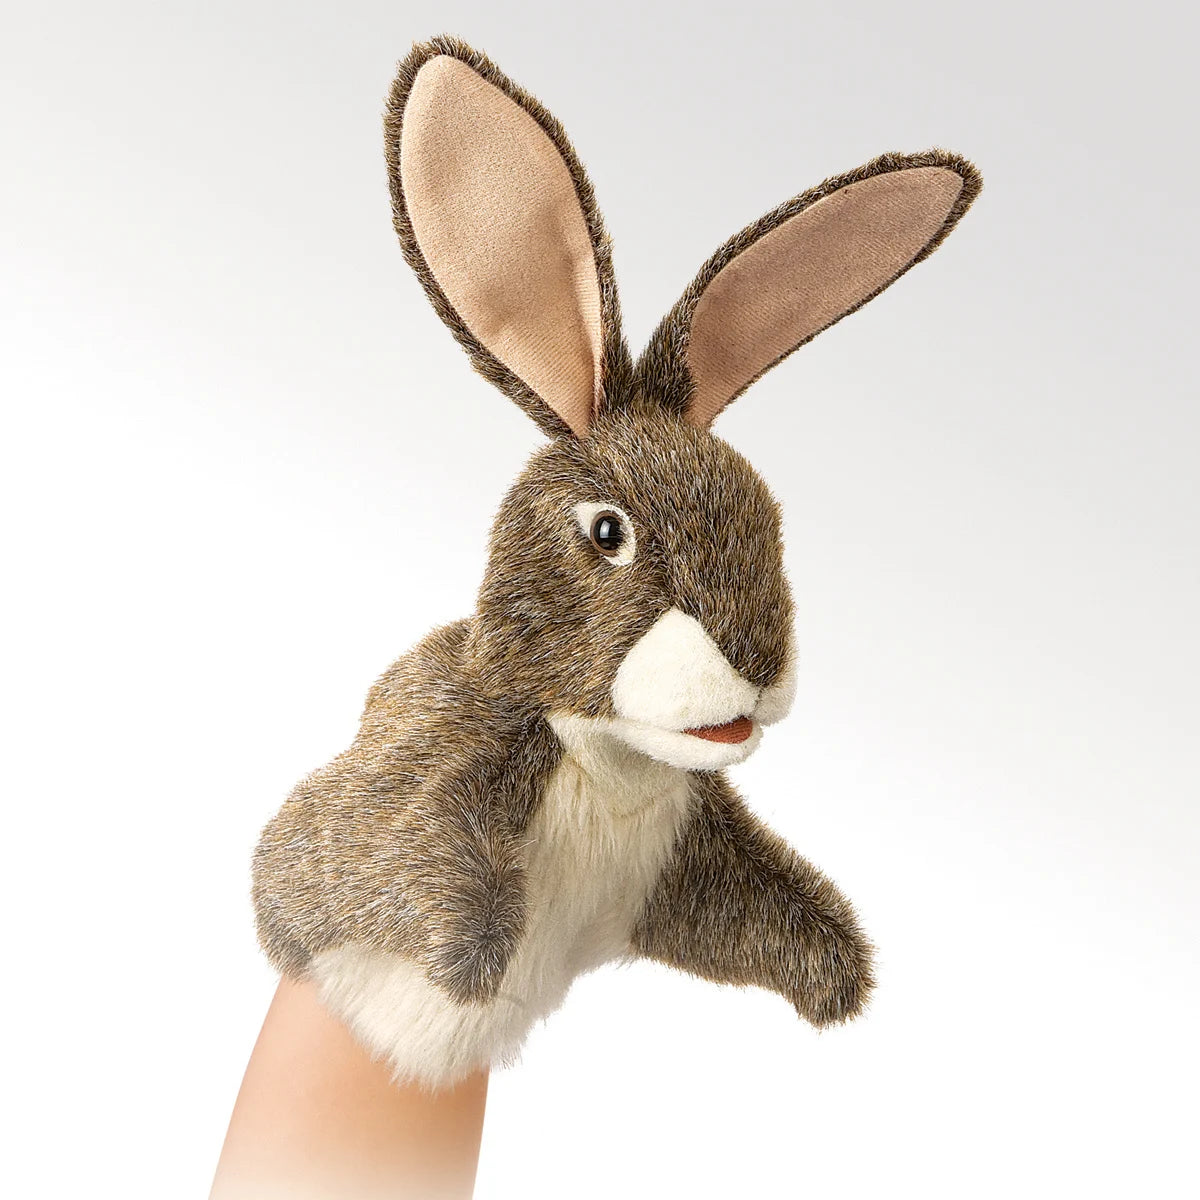 Petit lievre lapin little hare - Folkmanis